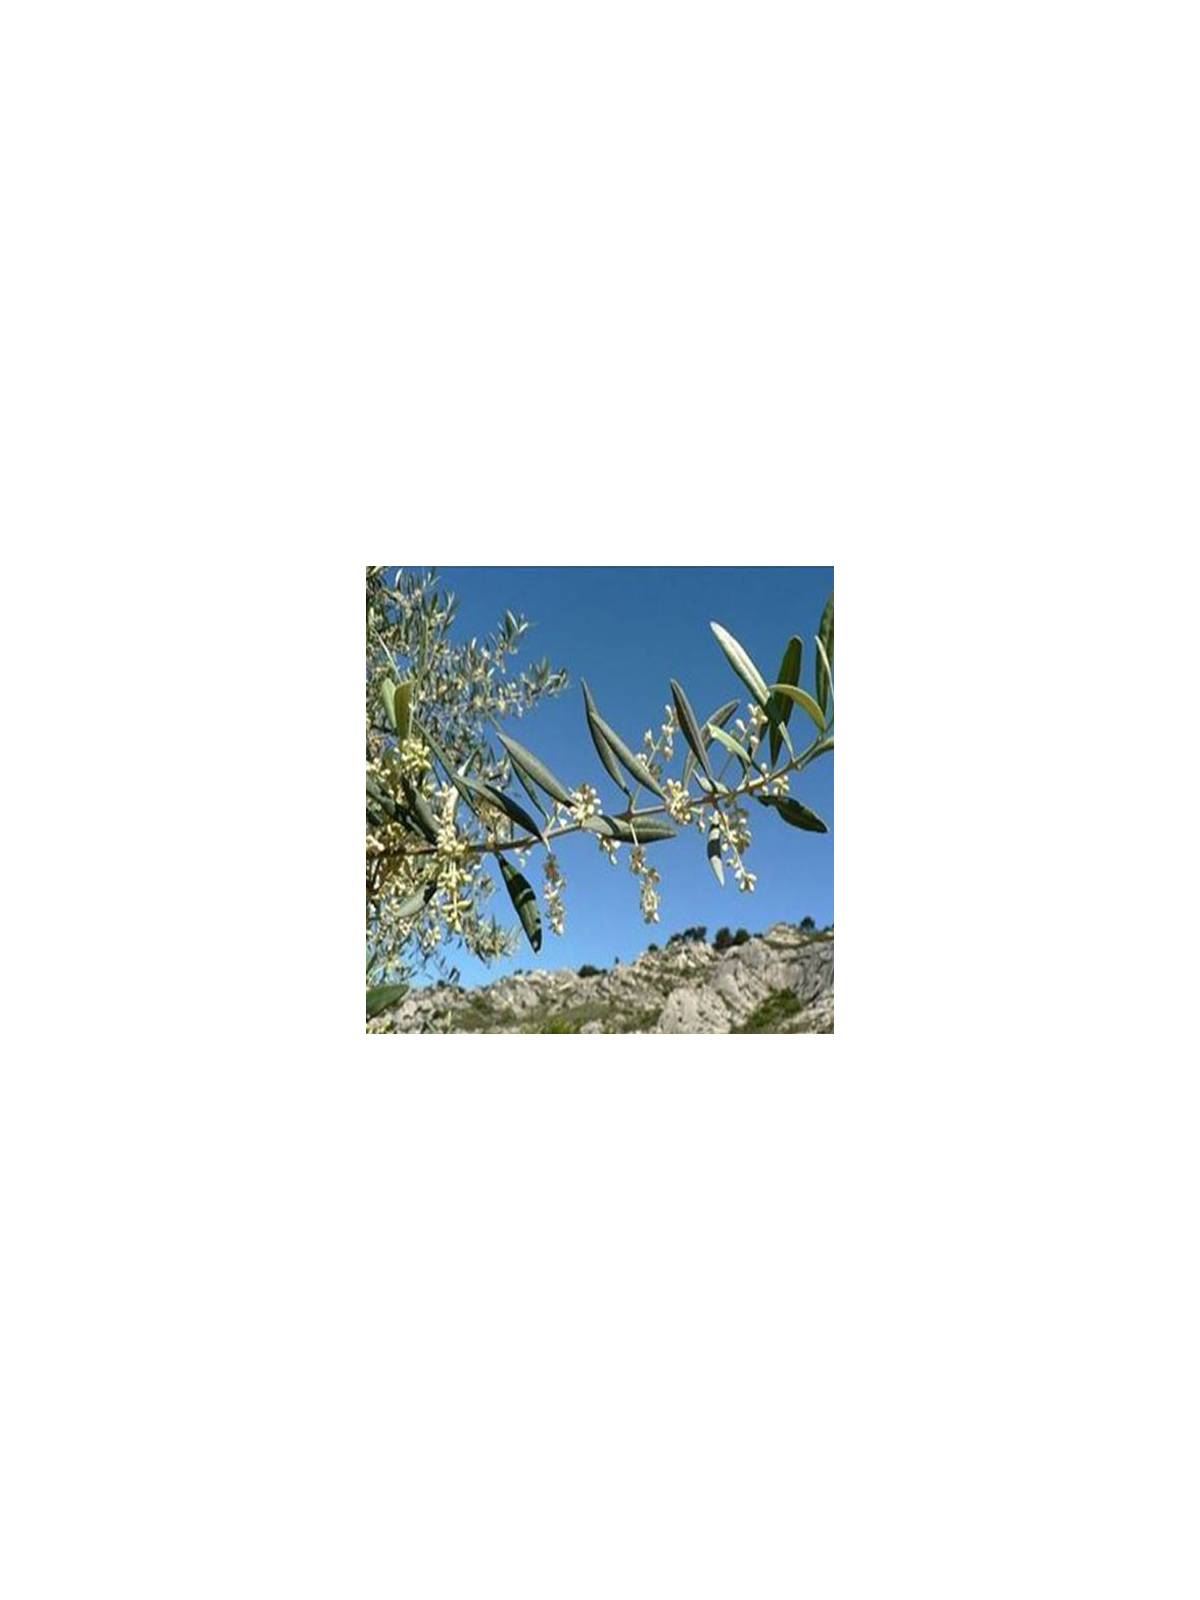 Globuli Olive no. 23 Just's Organic Bach Flower Pillules